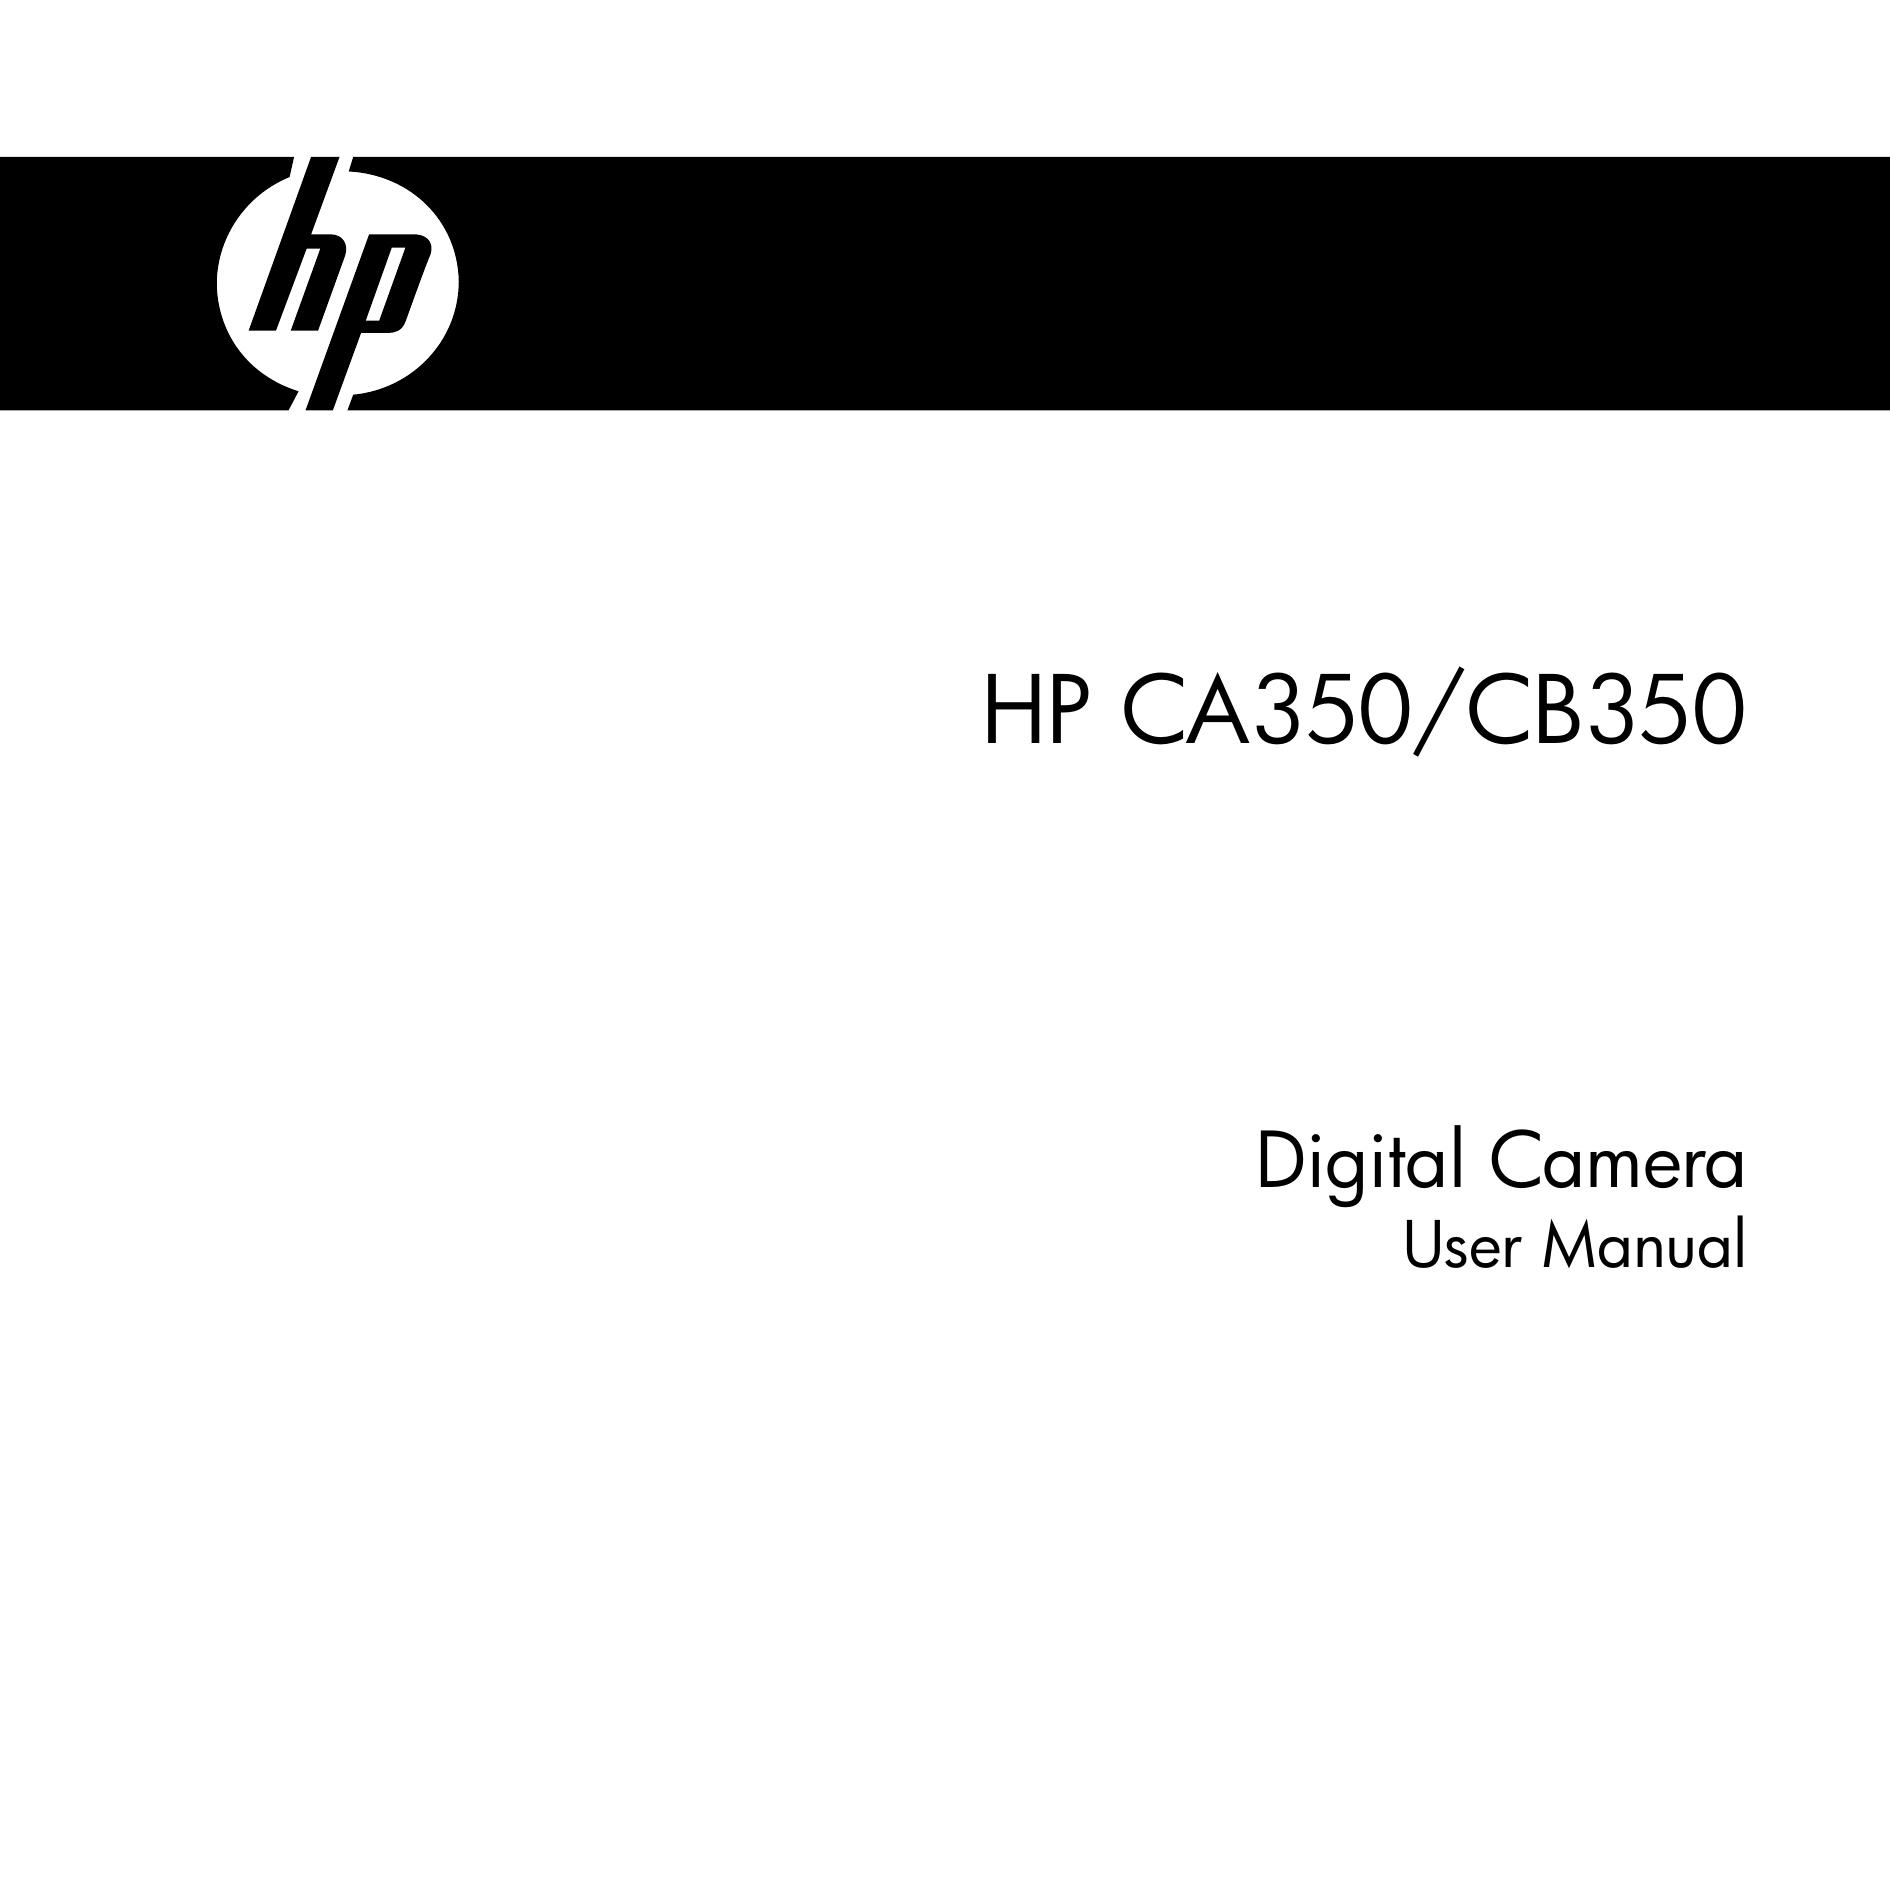 HP (Hewlett-Packard) CA350 Camcorder User Manual